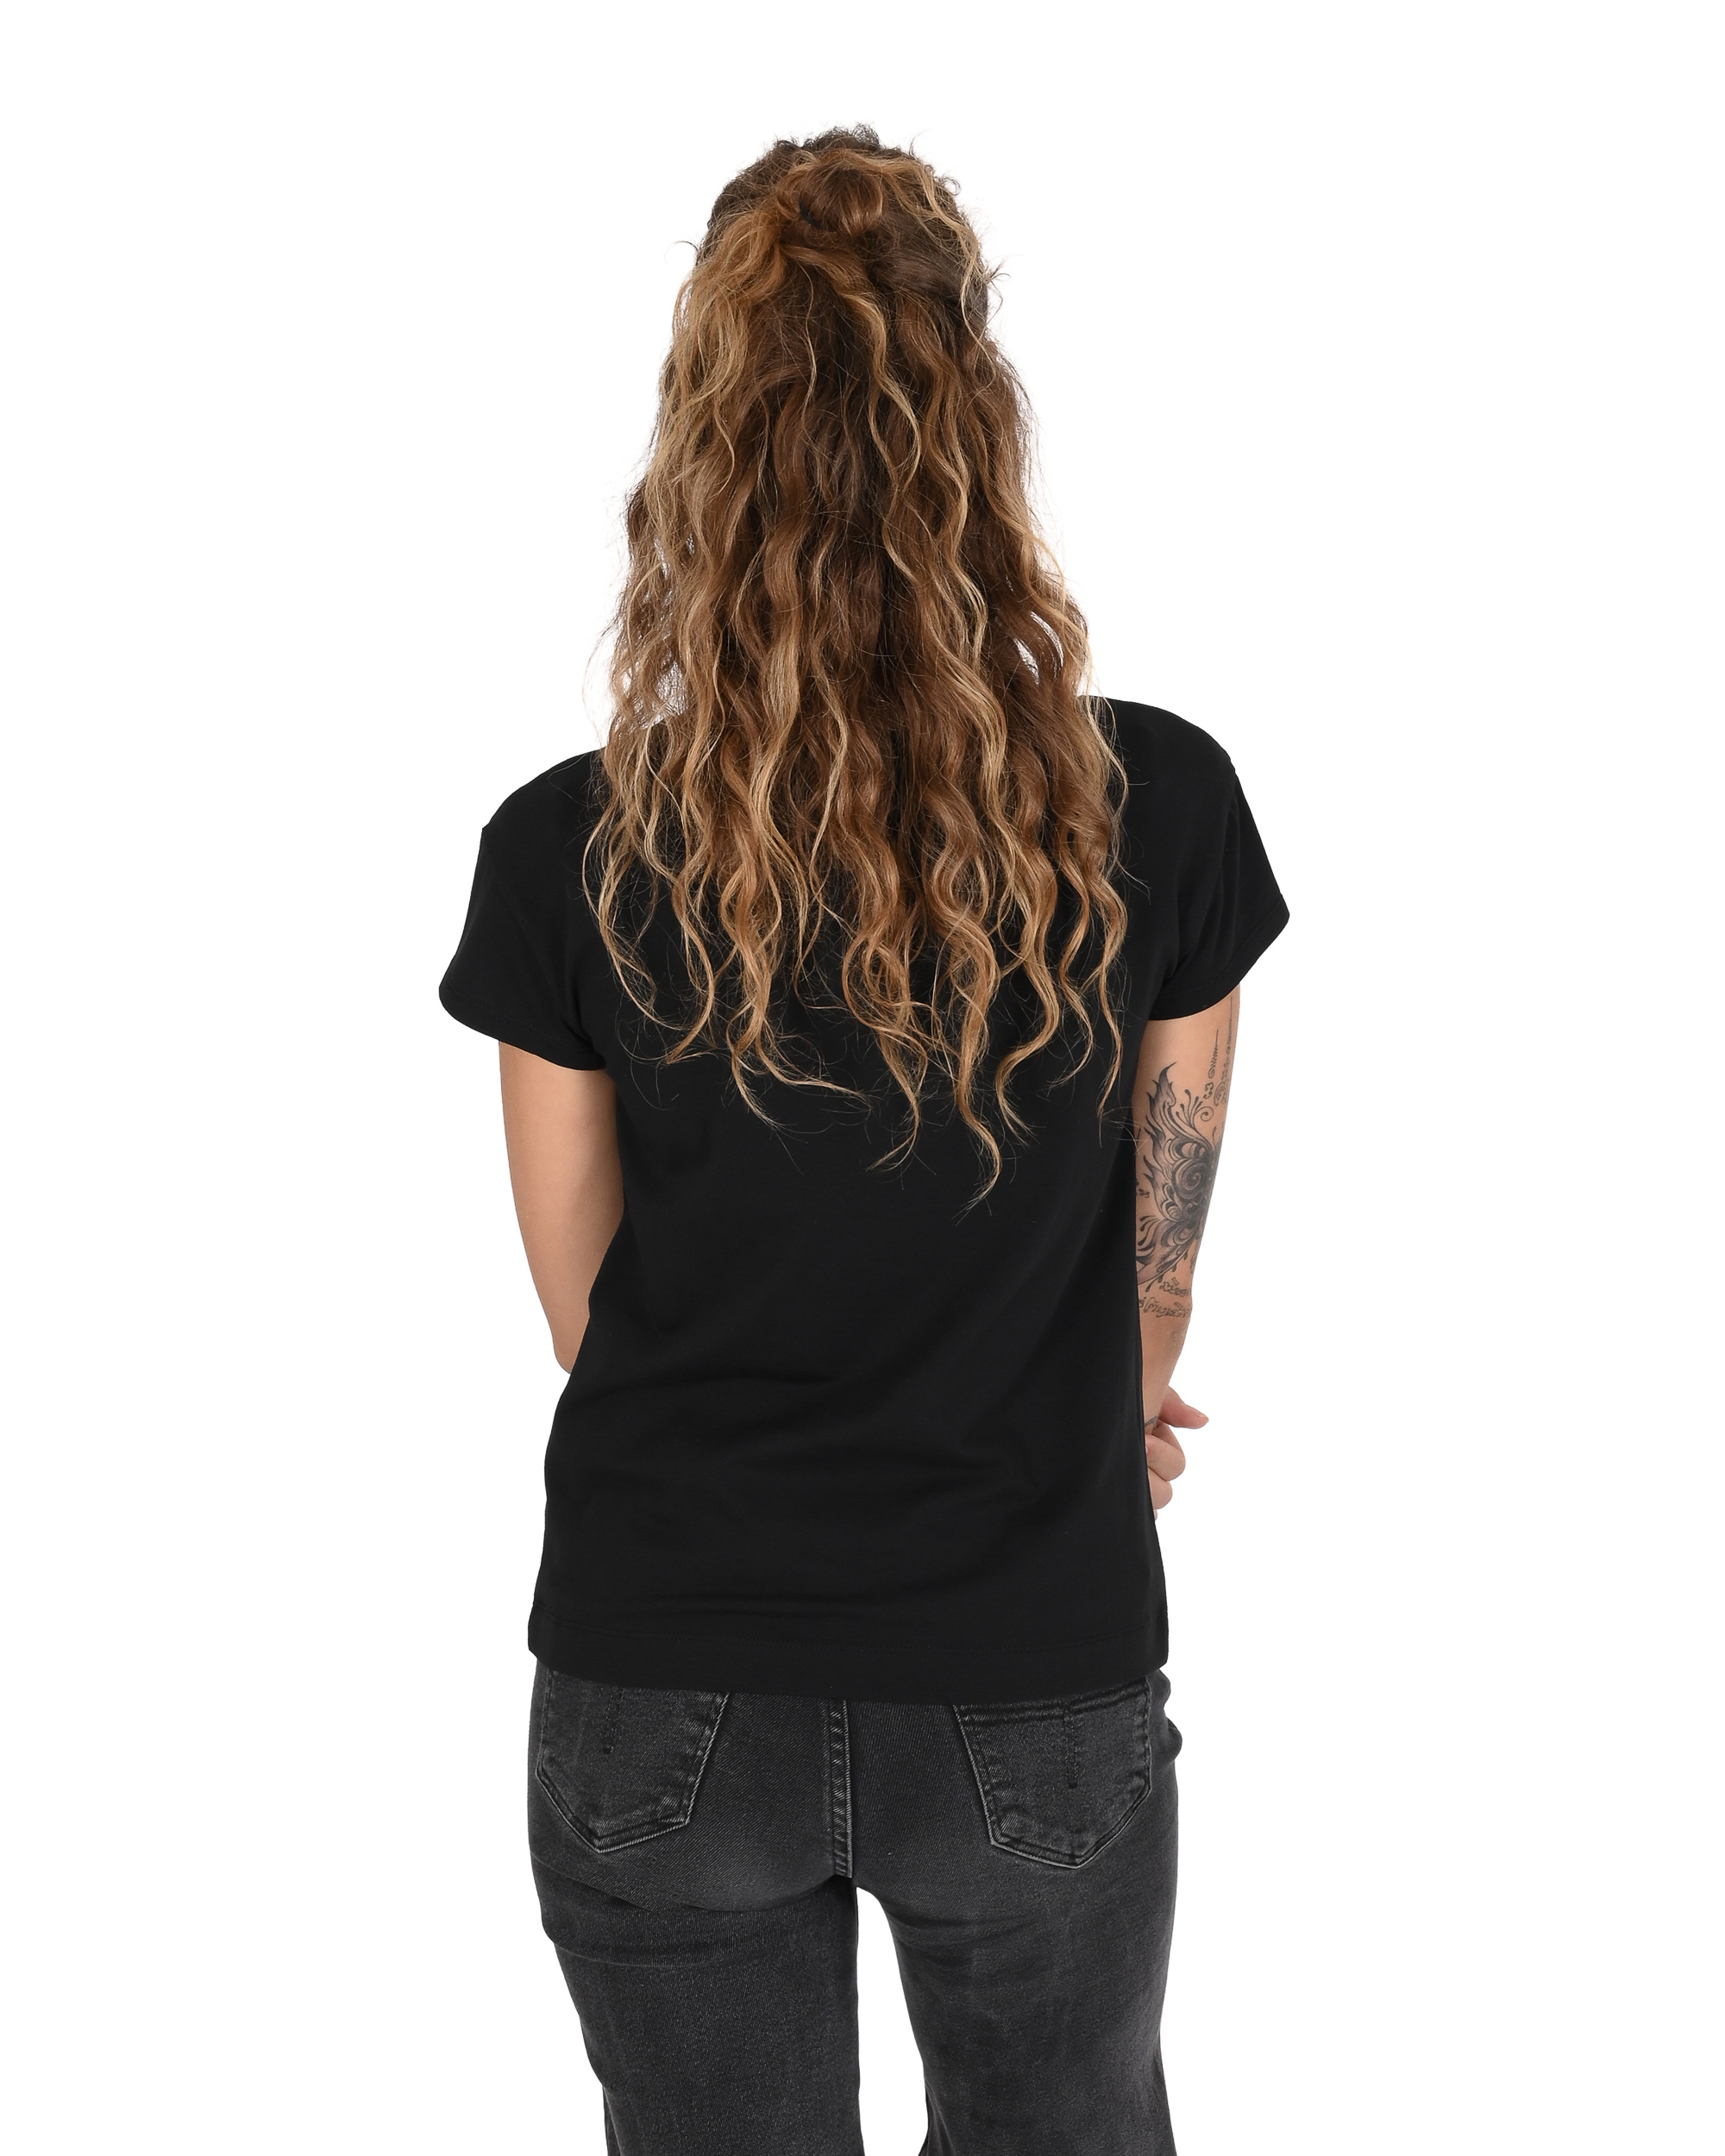 Black Cotton T-Shirt by Love Moschino